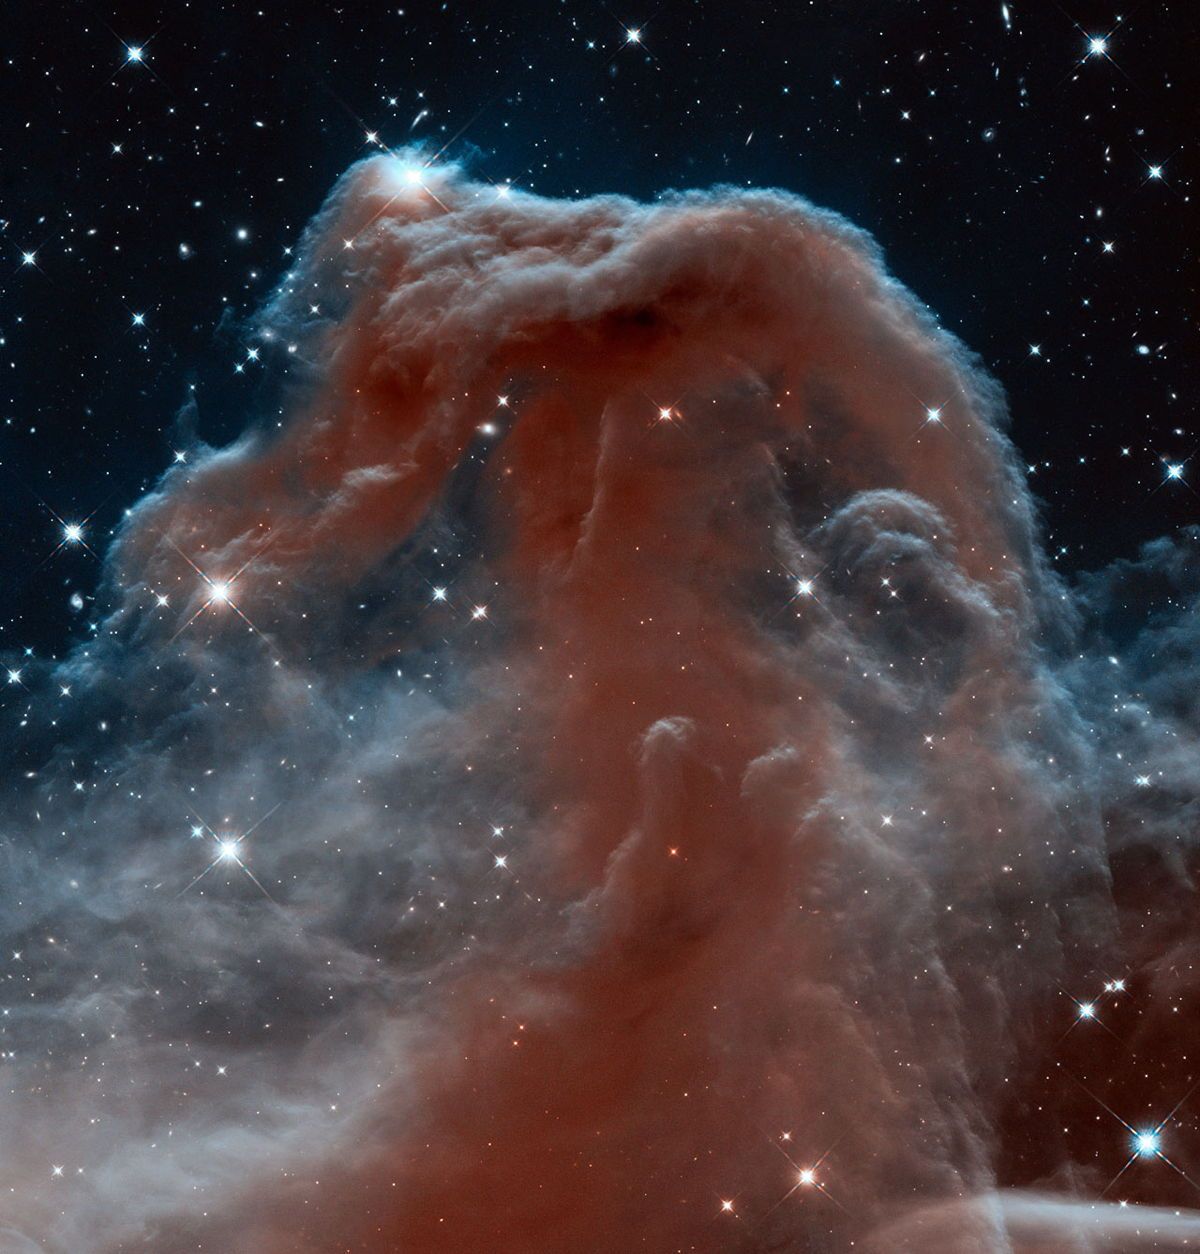 Hubble Space Telescope Snaps Stunning Nebula Photo On 23rd